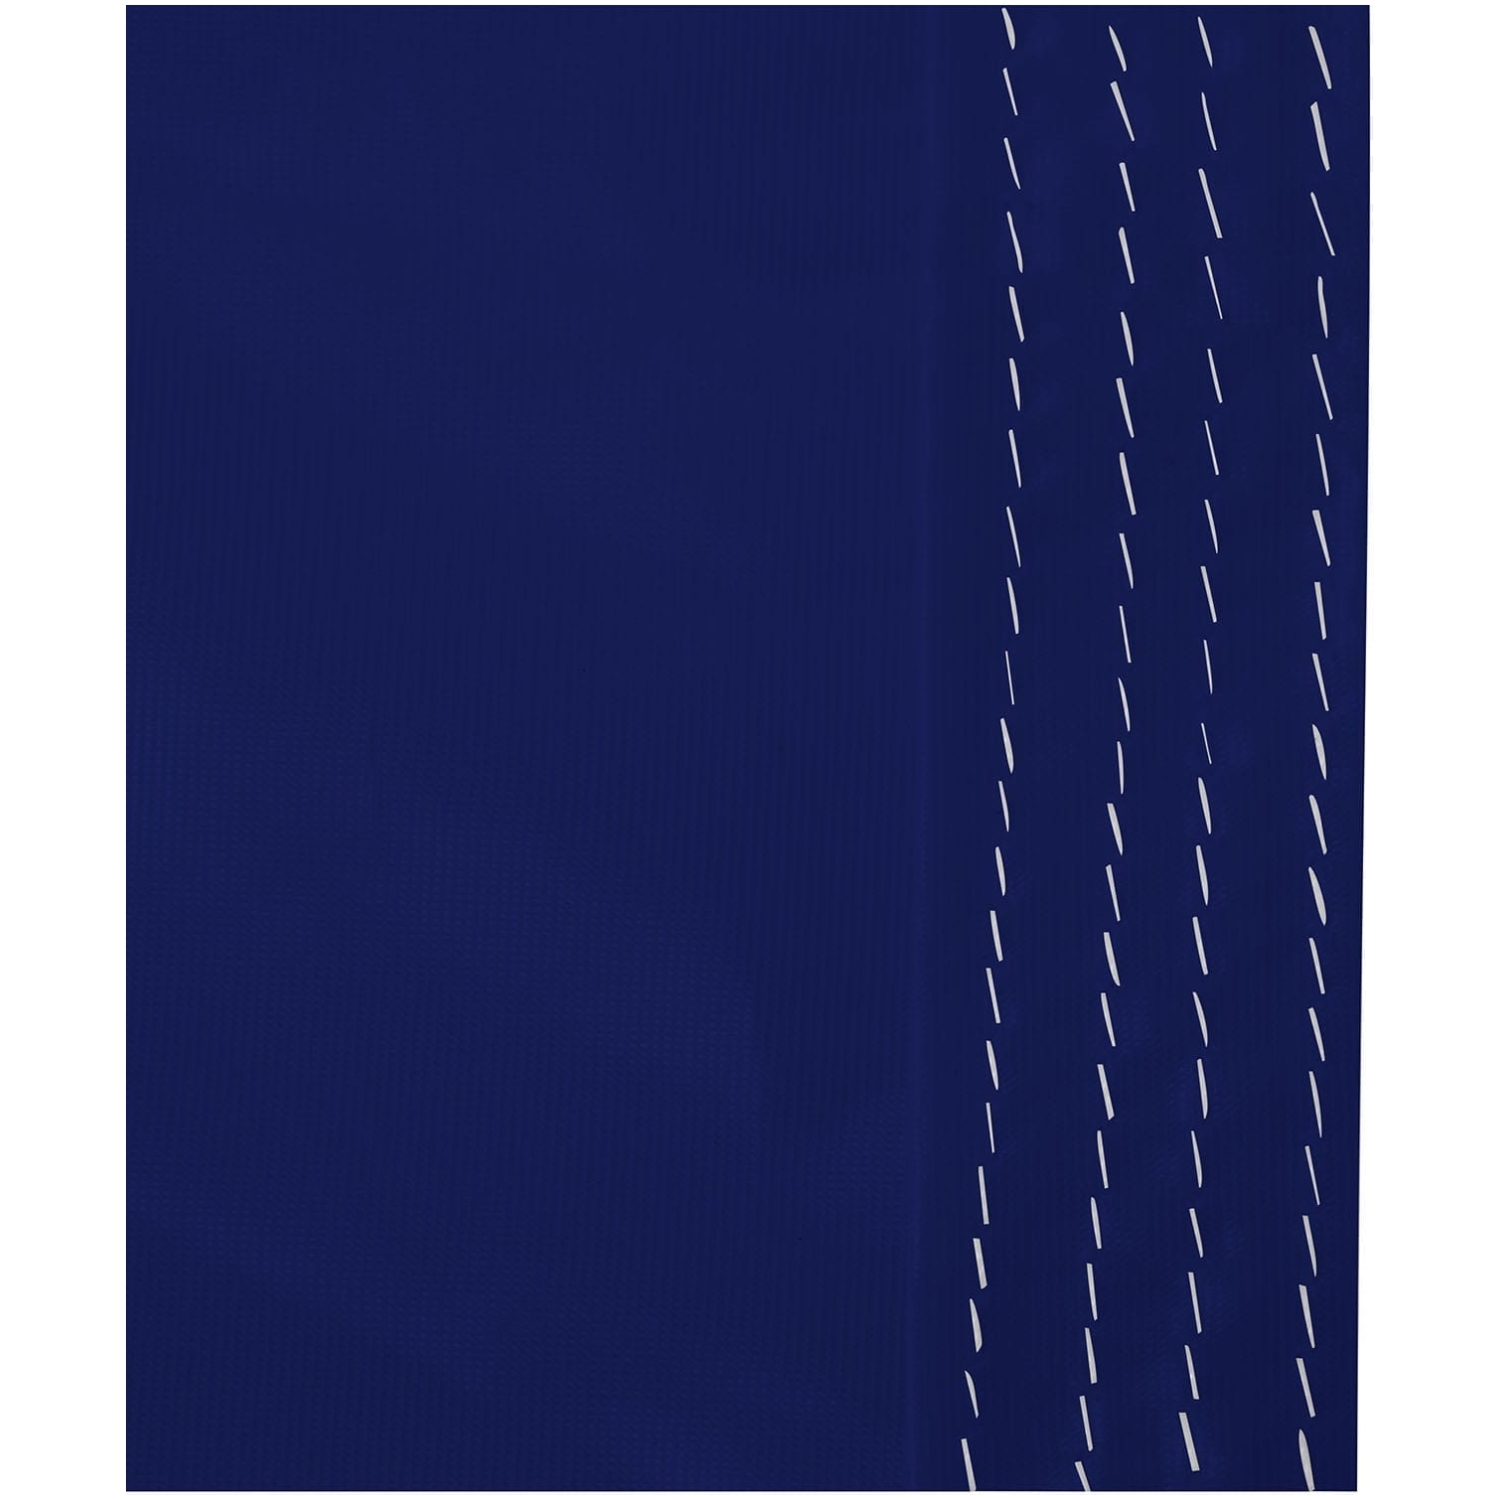 Spirit Flag Kit (single-sided) – 8′ X 12′